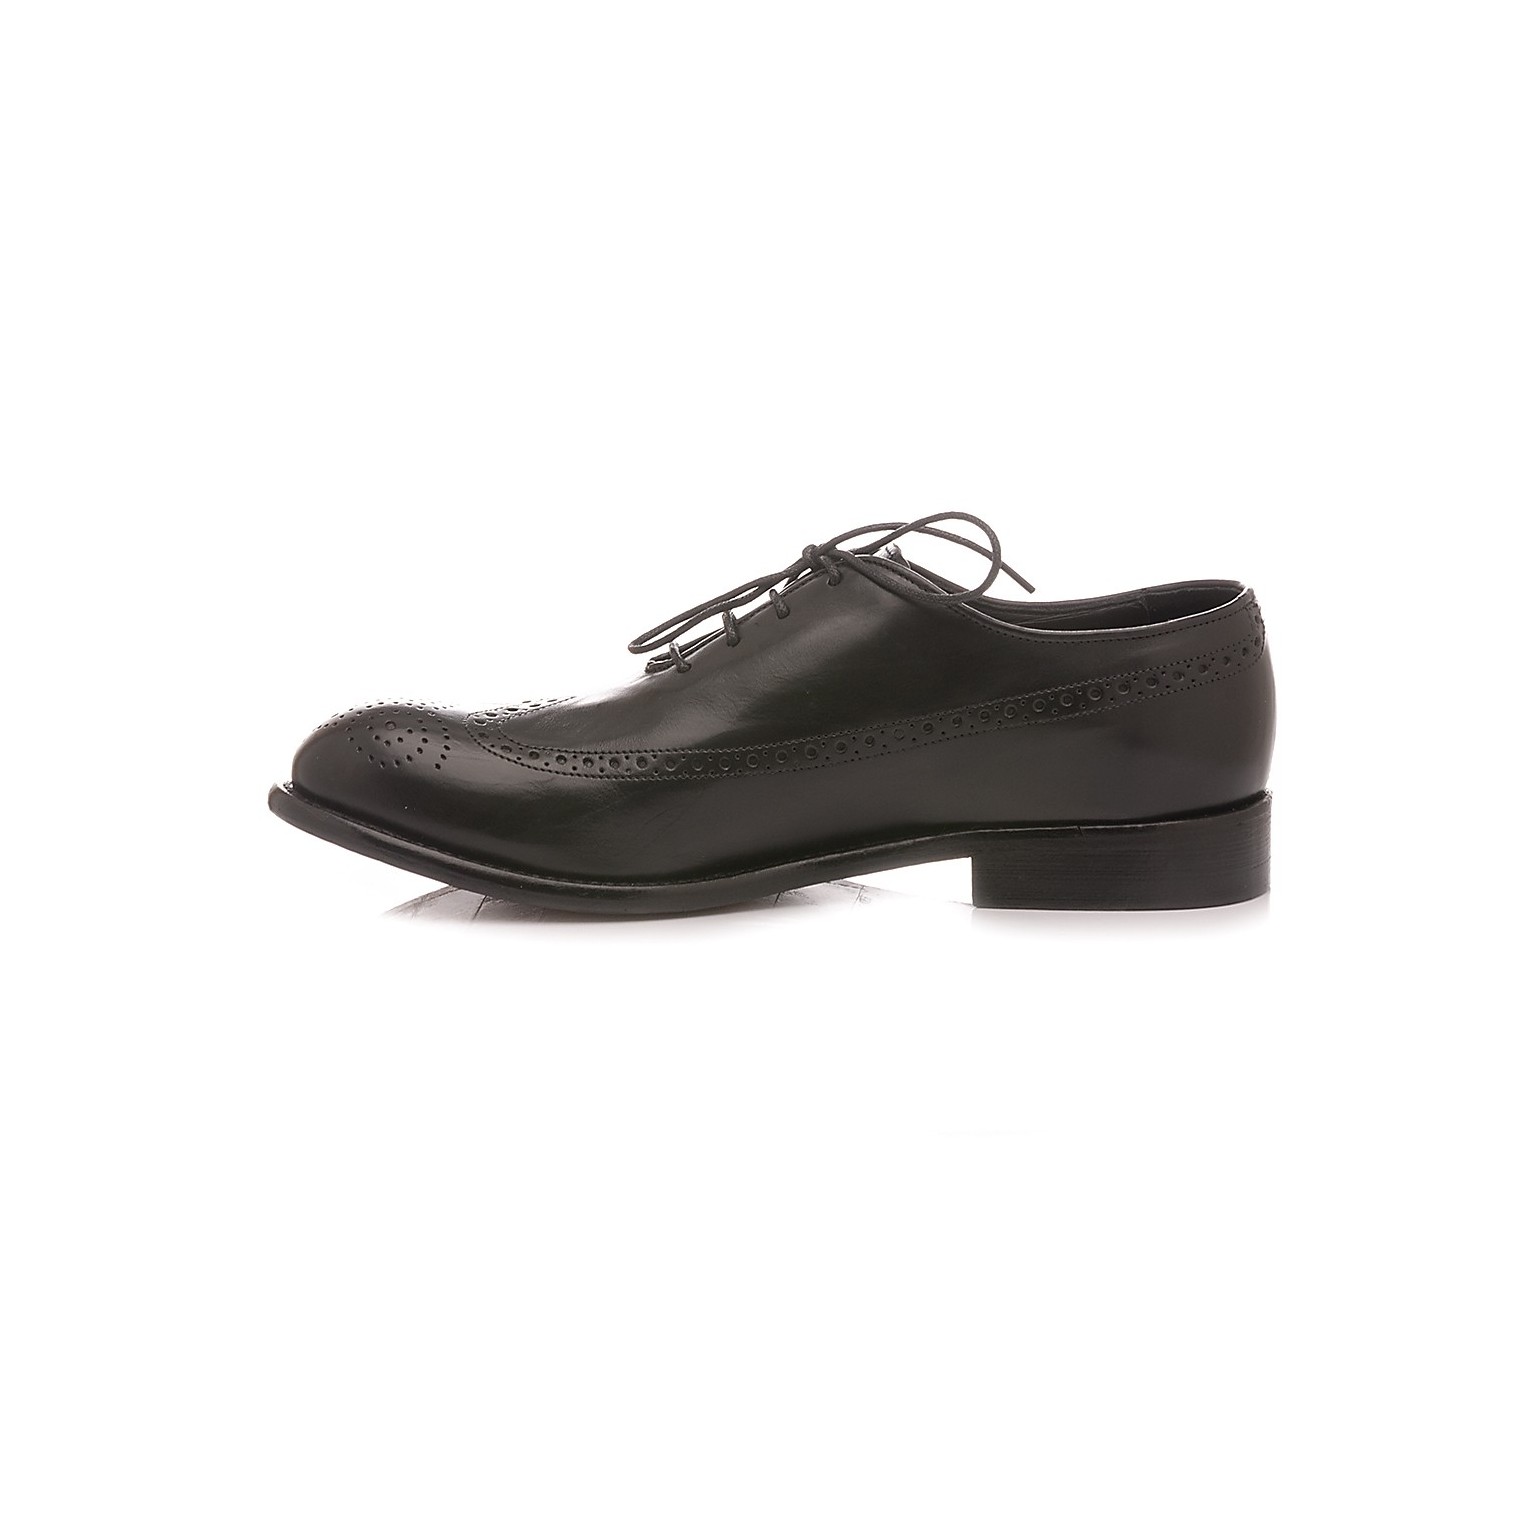 JP David Men's Shoes Leather Black 36526/12